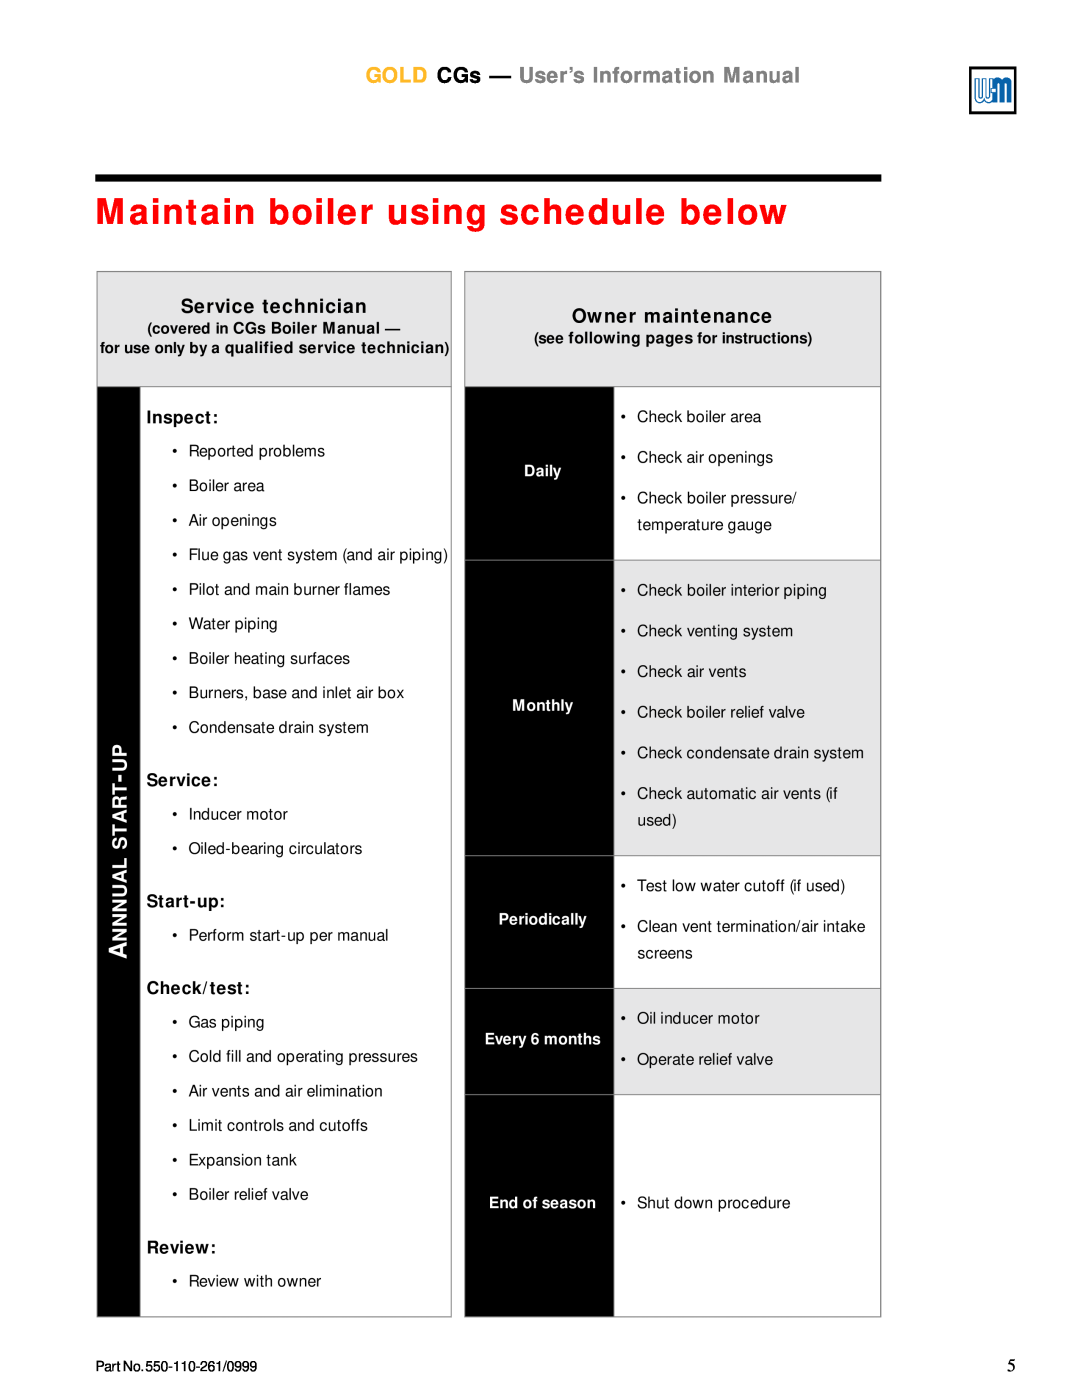 Weil-McLain Maintain boiler using schedule below, GOLD CGs - User’s Information Manual, Service technician, Annnual 